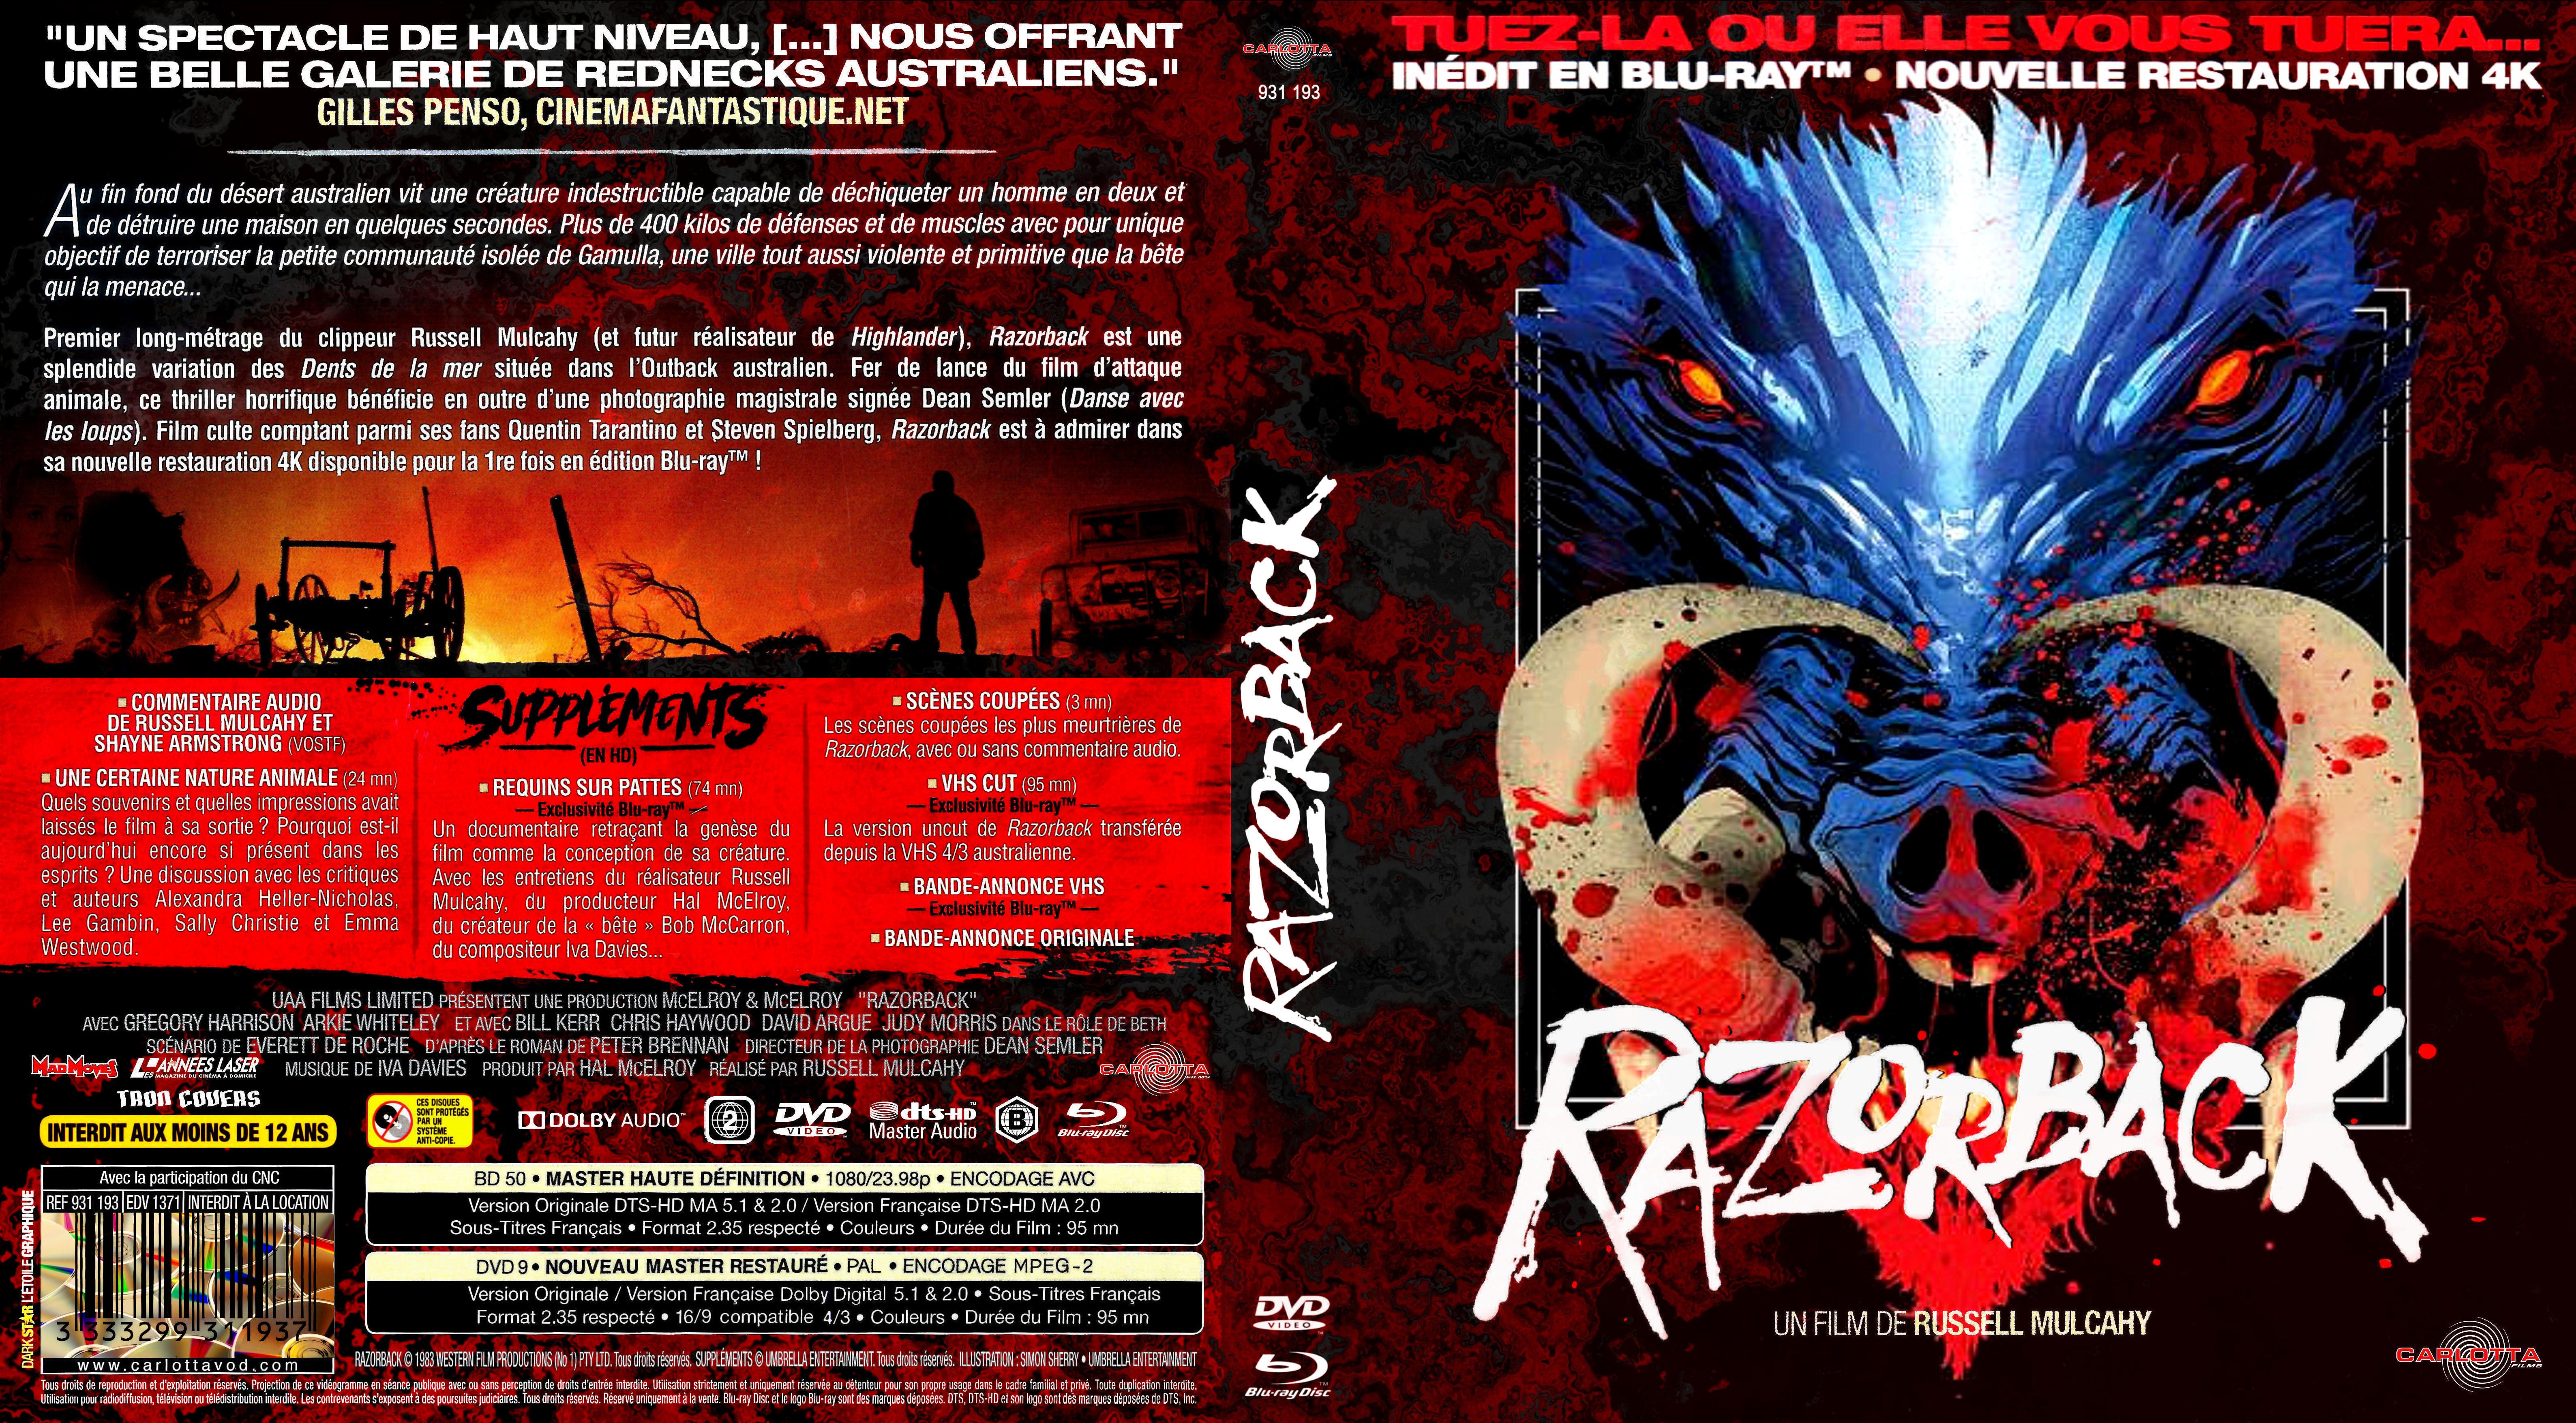 Jaquette DVD Razorback custom (BLU-RAY)